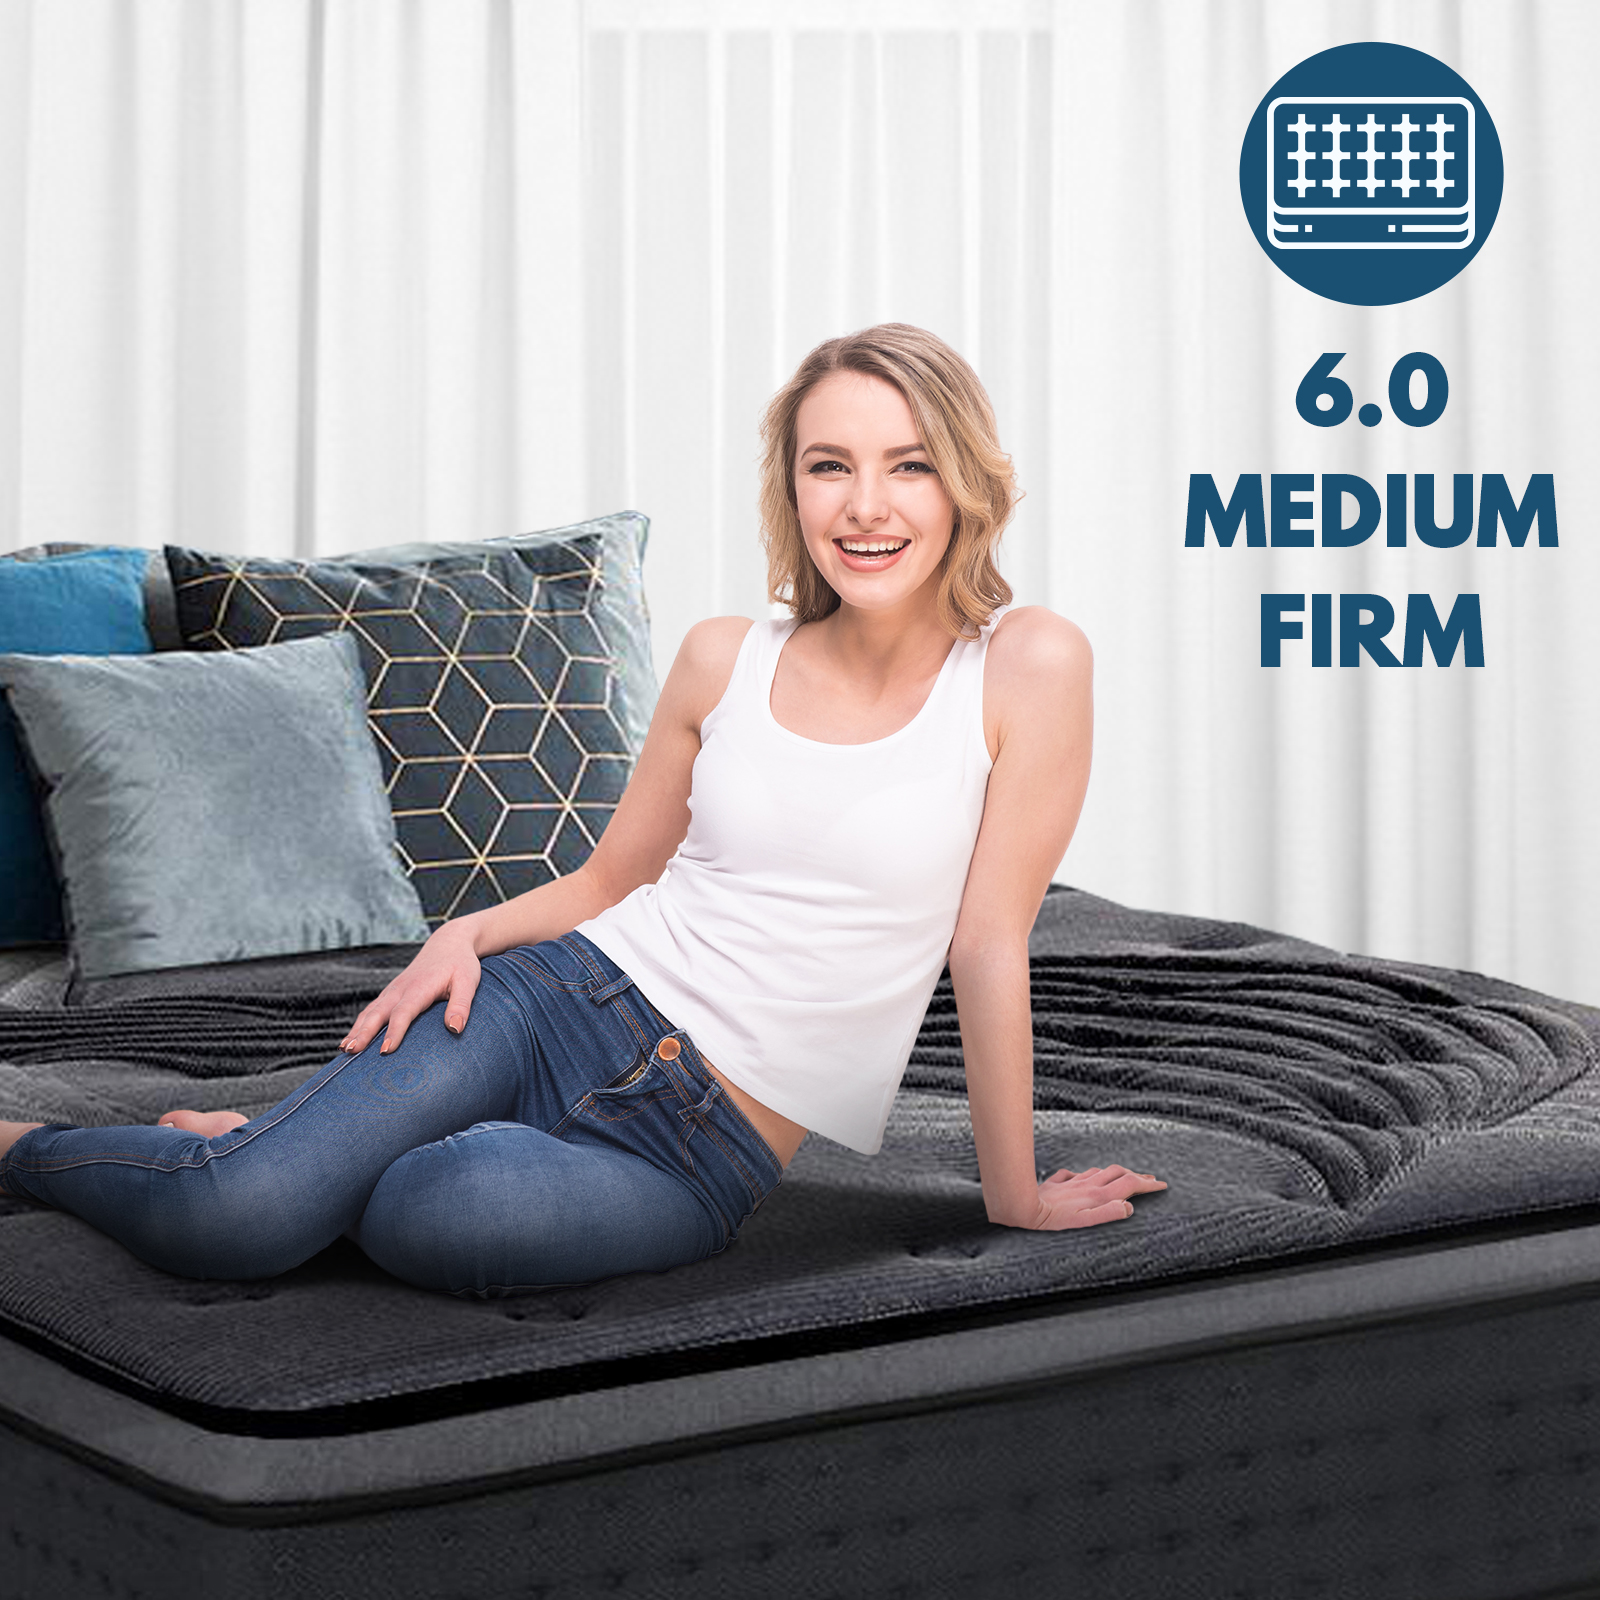 Single Size Euro Top Mattress Bed Pocket Spring Foam Bamboo 34CM Medium Firm